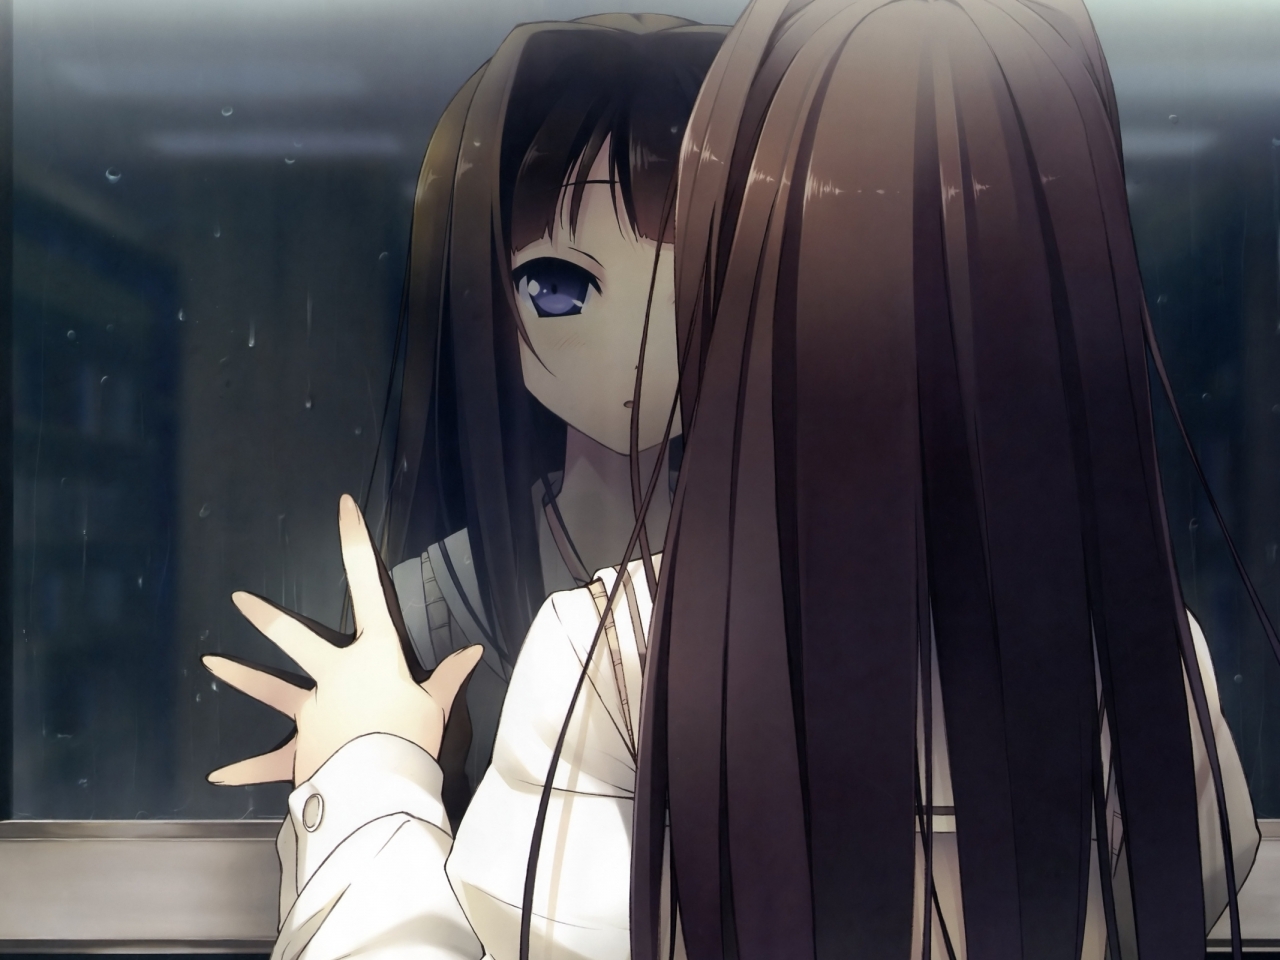 http://img1.wikia.nocookie.net/__cb20121104231139/creepypasta/images/3/3b/Anime_girl_window_reflection_drop_rain_look_28847_1280x960-2-.jpg